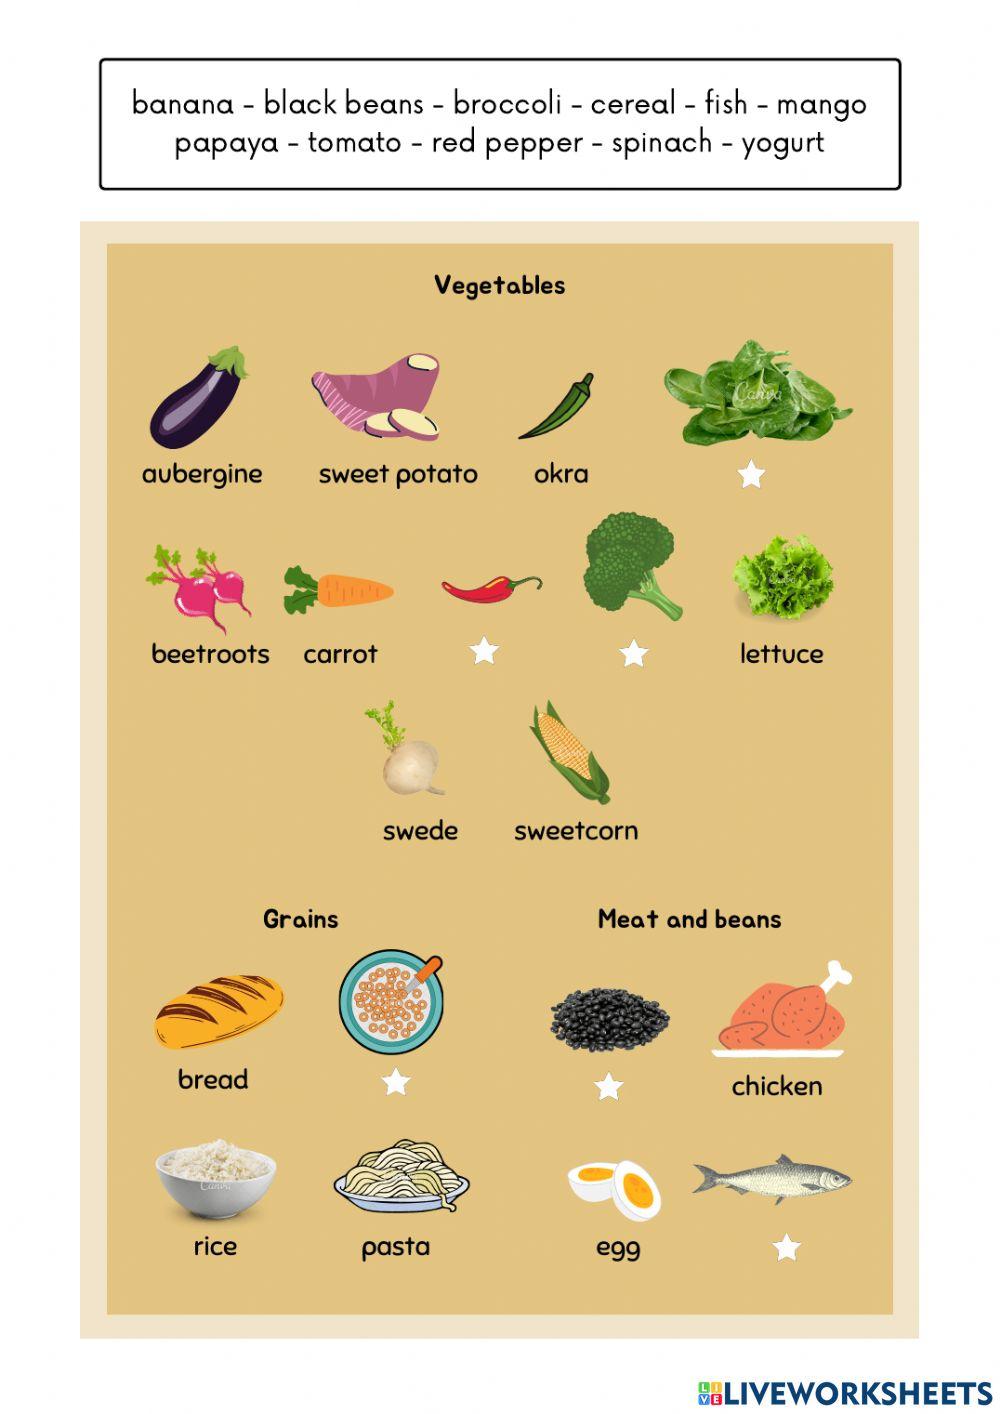 Eat a Rainbow - Food Vocabulary